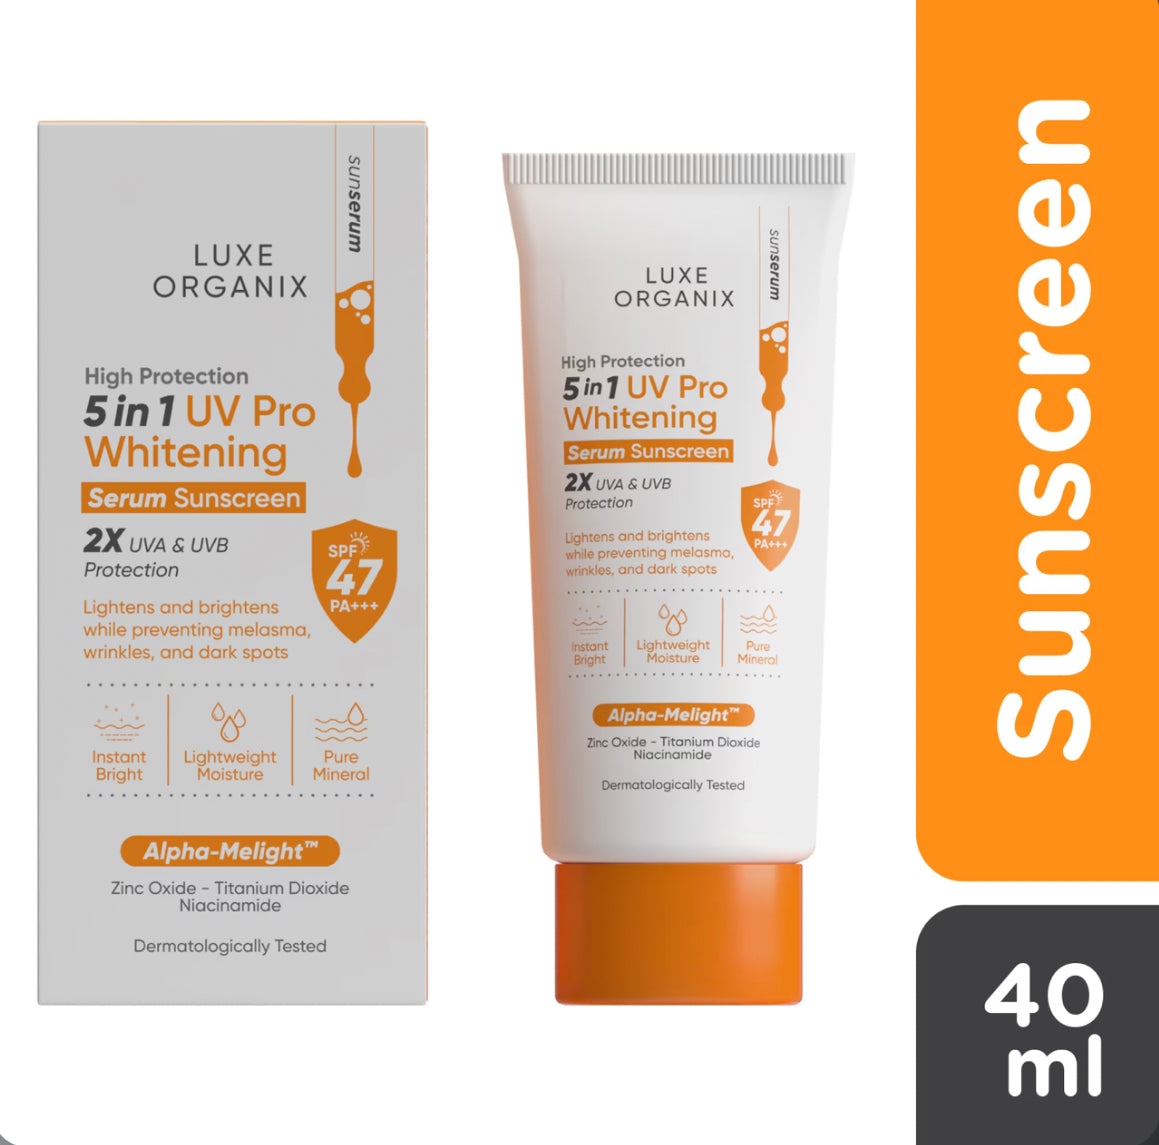 LUXE ORGANIX 5 in 1 UV PRO WHITENING SERUM SUNSCREEN – Lalas Cosmetics